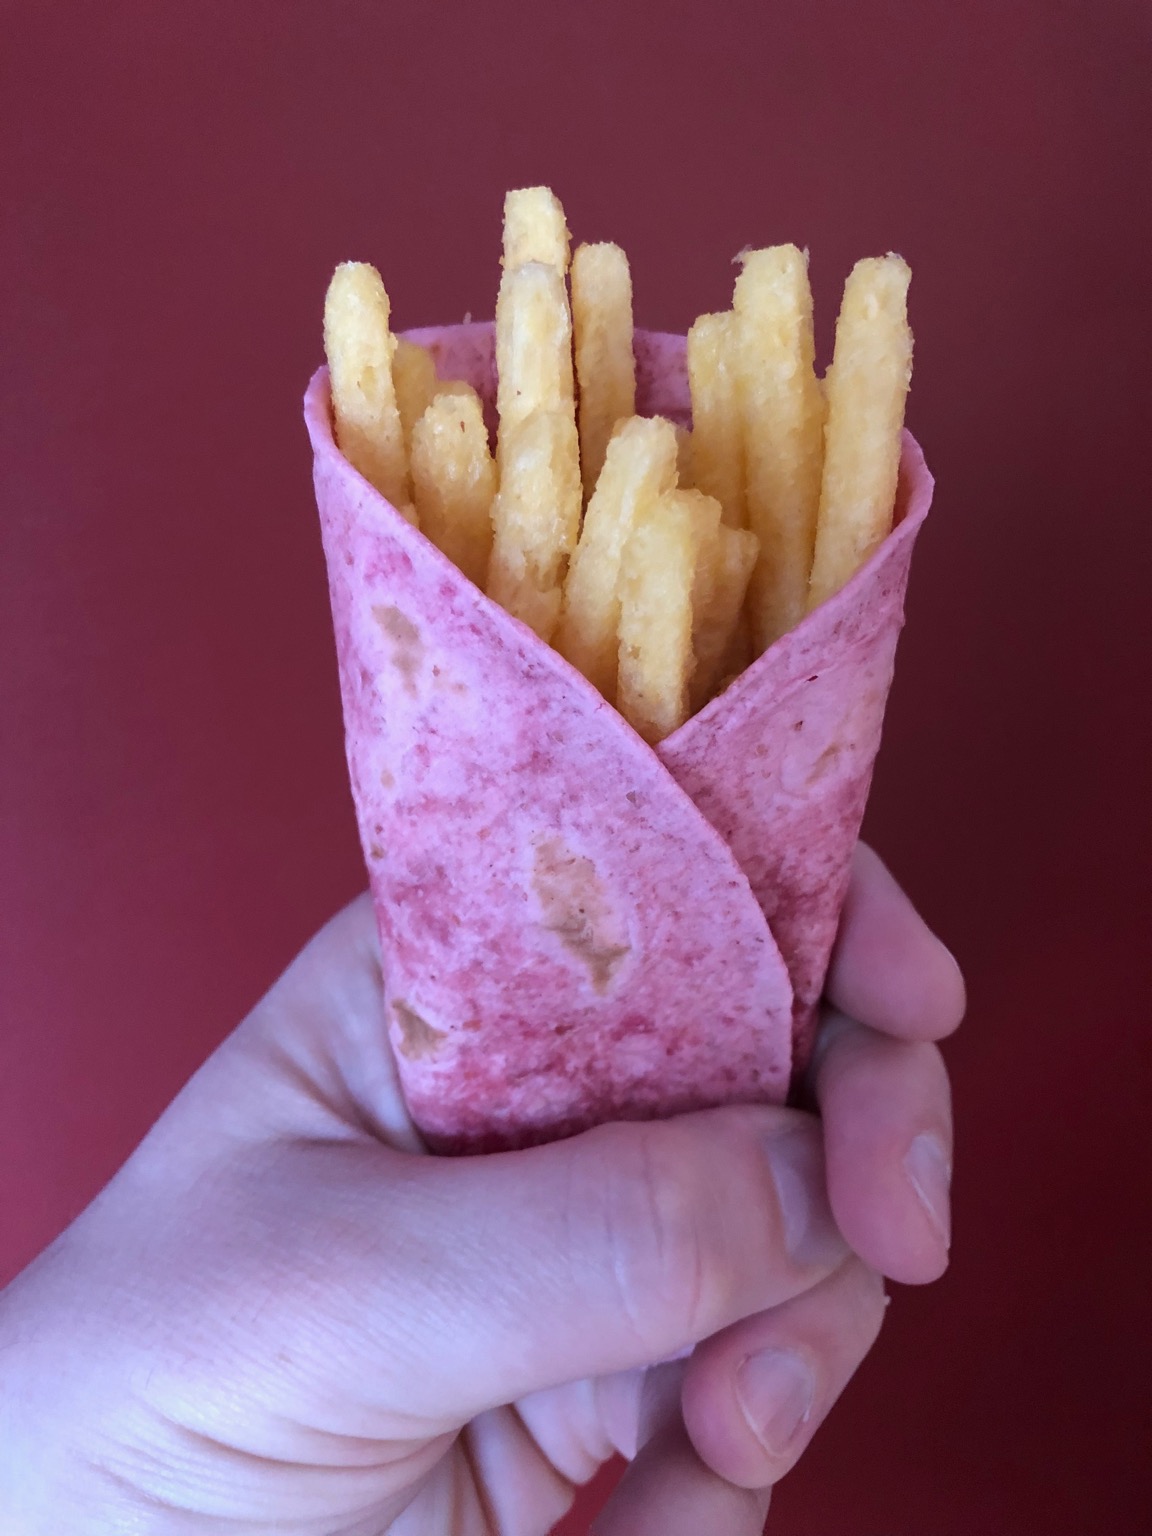 Chipsticks held in a pink tortilla wrap